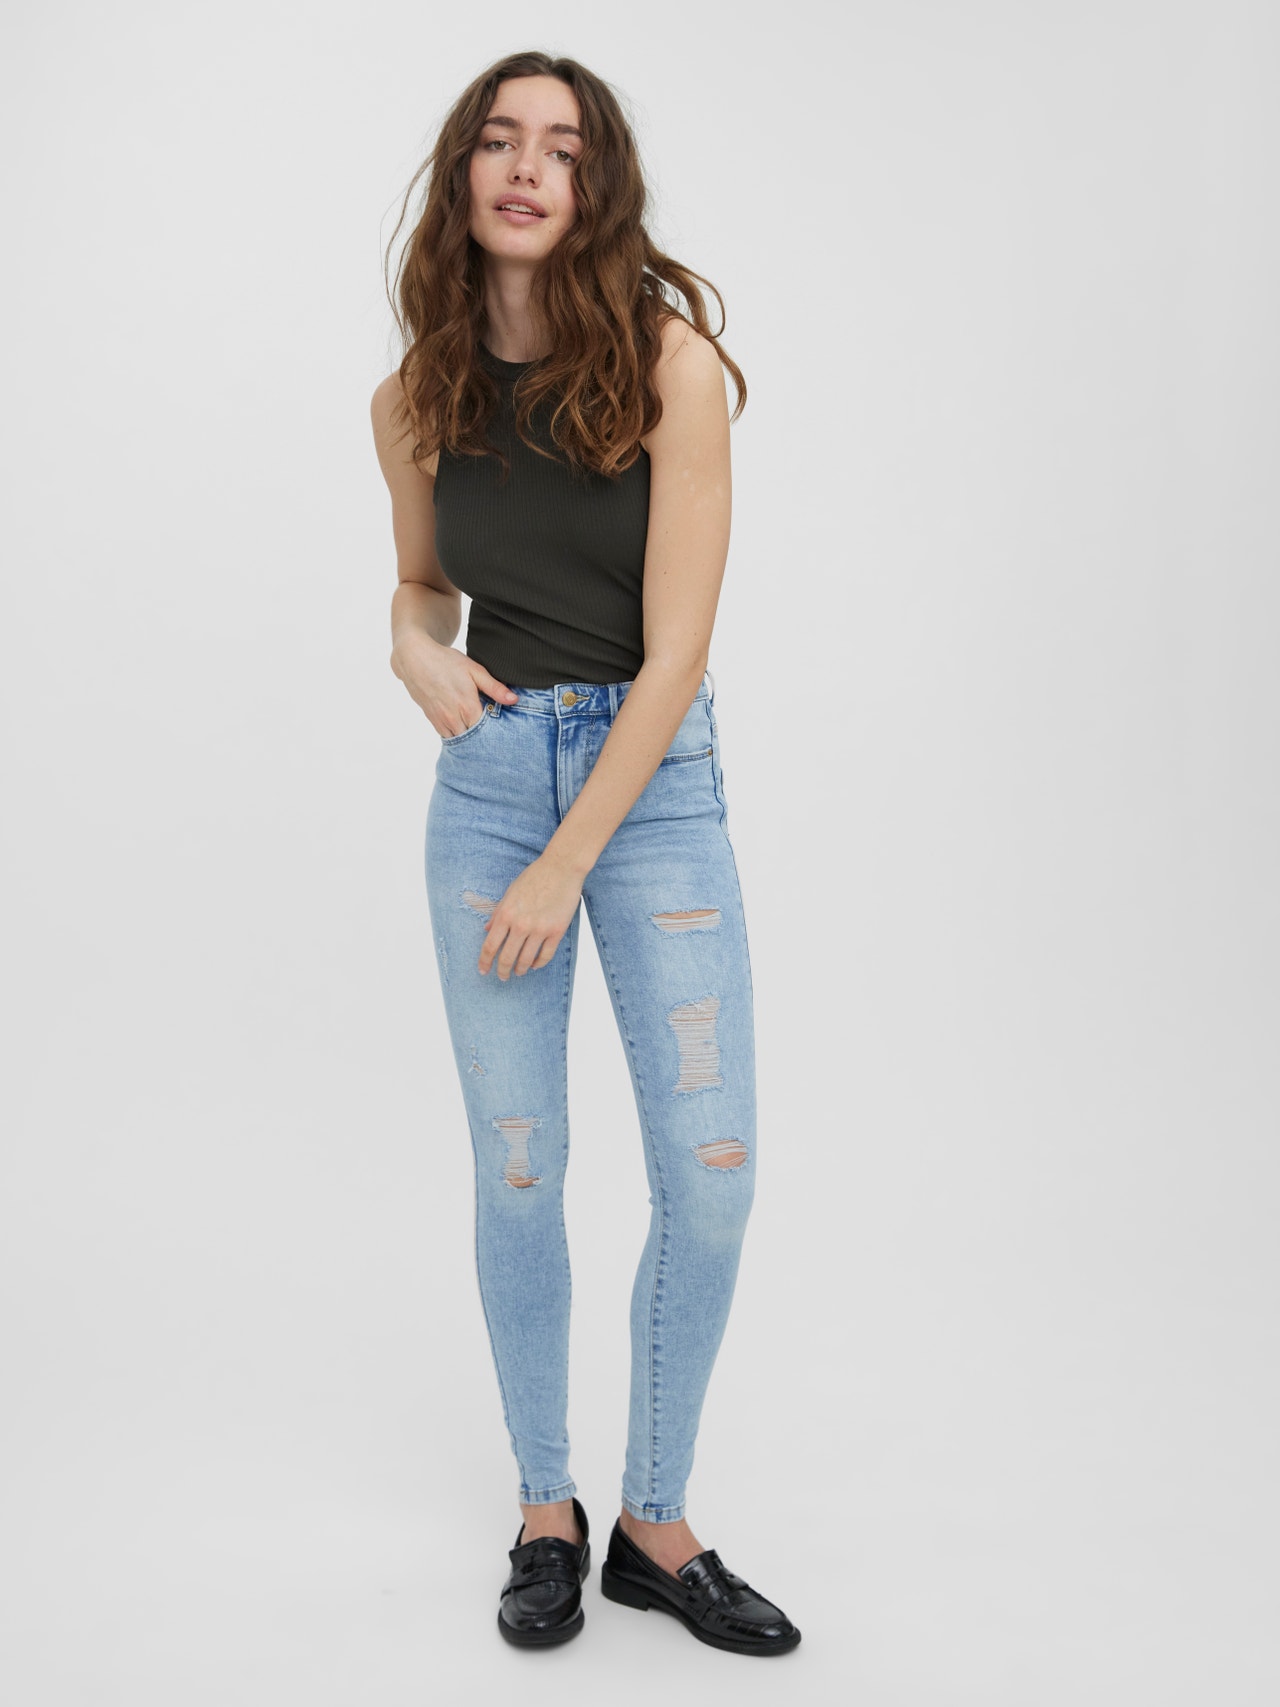 Vero Jeans Moda® VMSOPHIA | 50% discount! High rise with